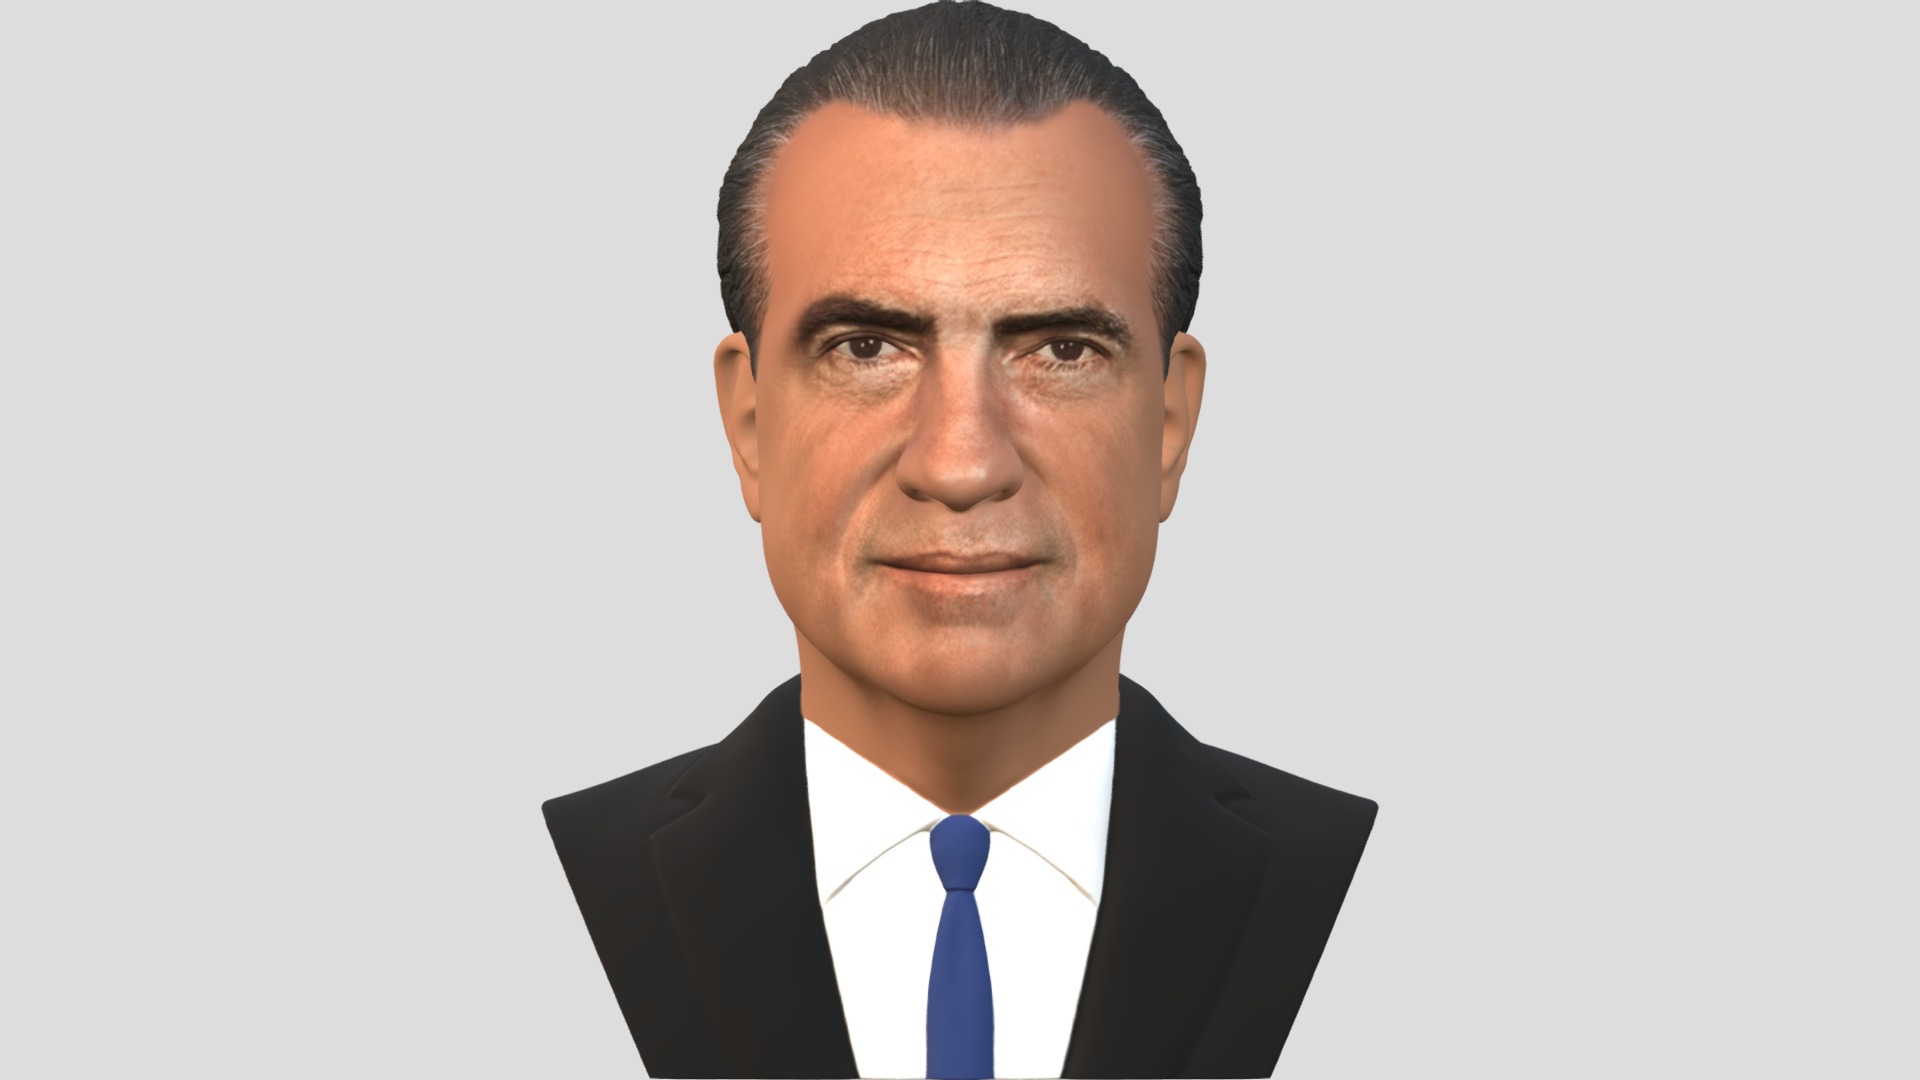 3D model Richard Nixon bust for full color 3D printing - This is a 3D model of the Richard Nixon bust for full color 3D printing. The 3D model is about a man in a suit.